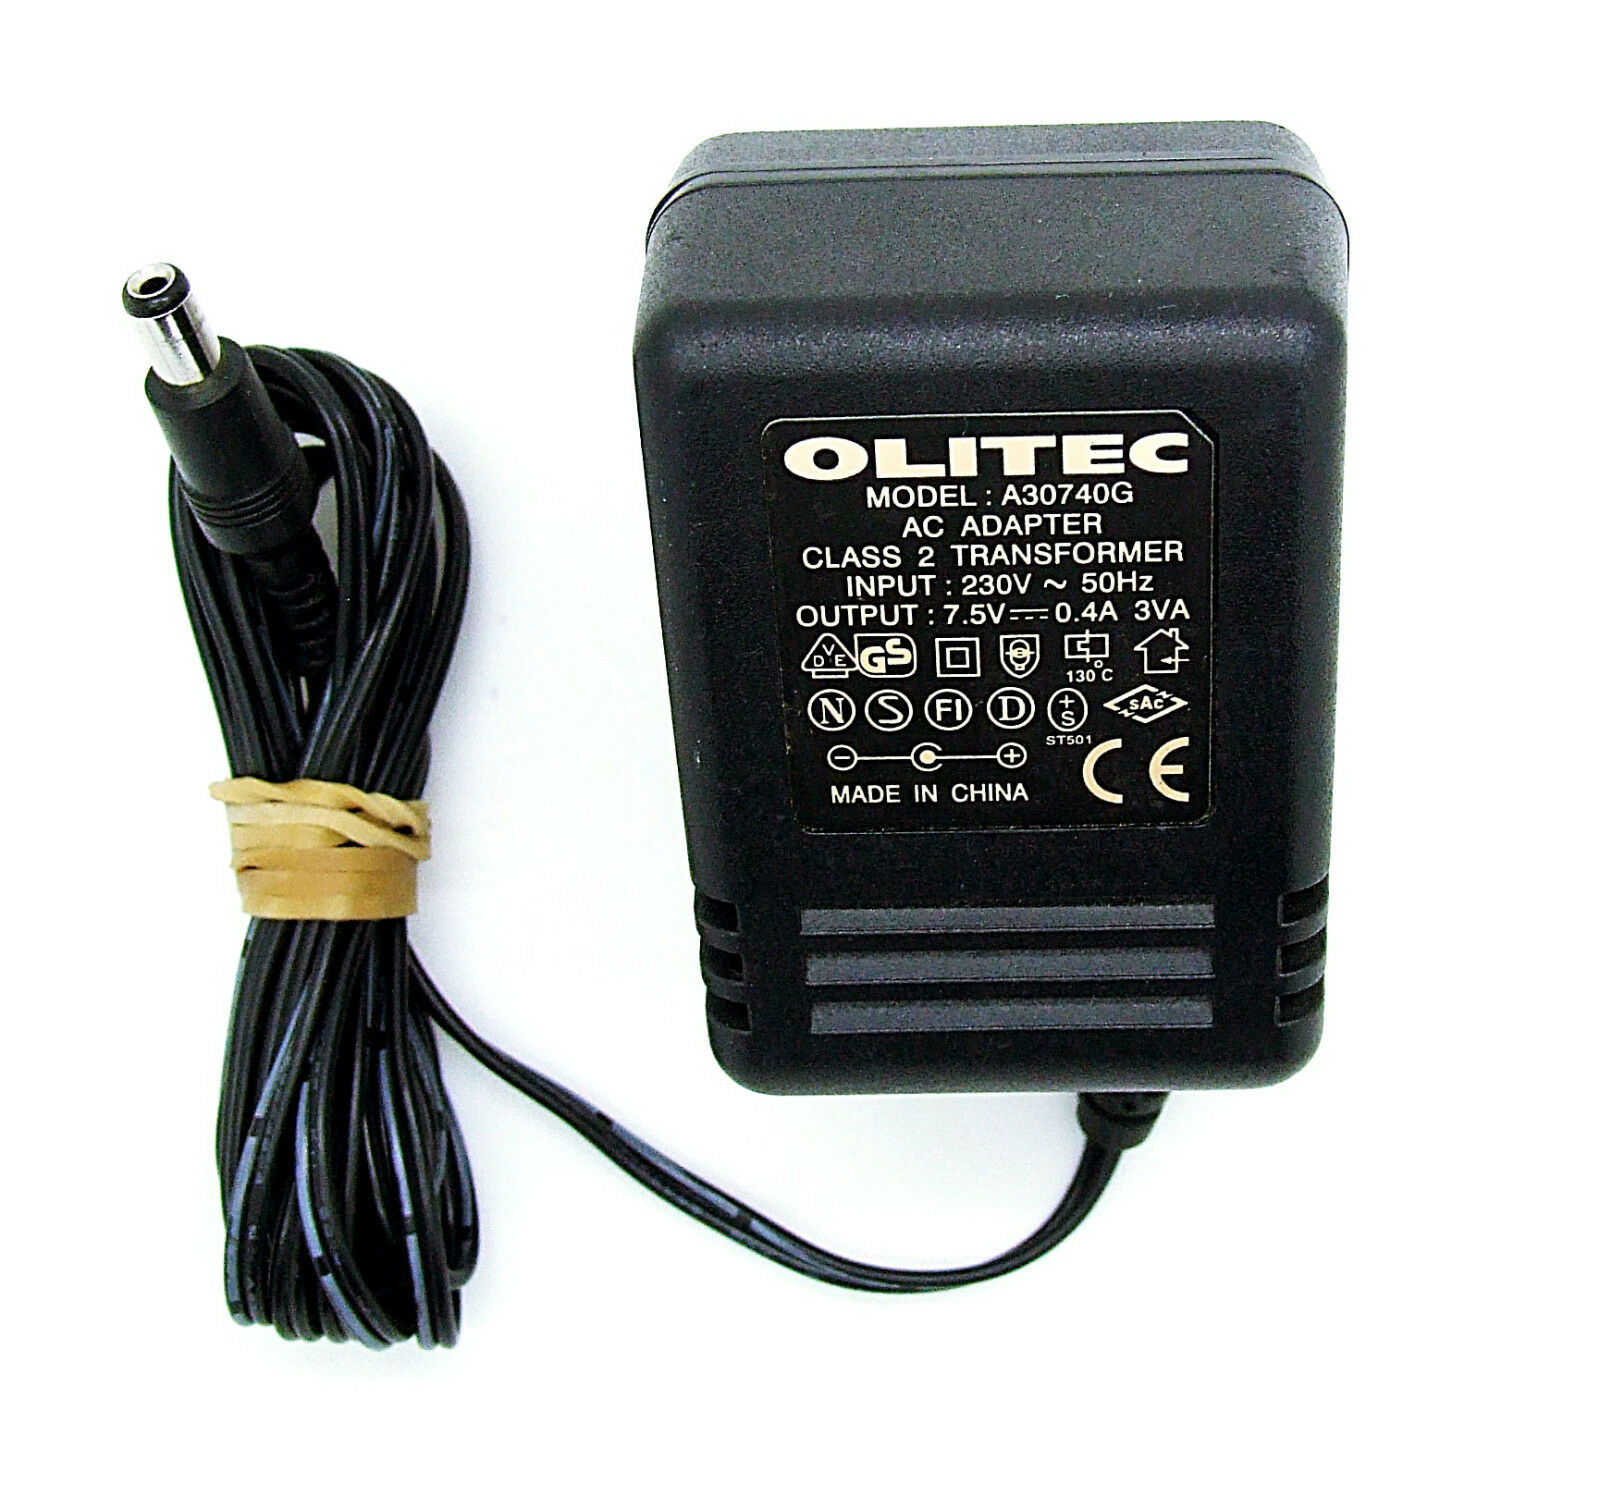 Original Olitec Power Supply a30740g AC Adapter 7,5v 0,4a Artikelbeschreibung Original Olitec Net